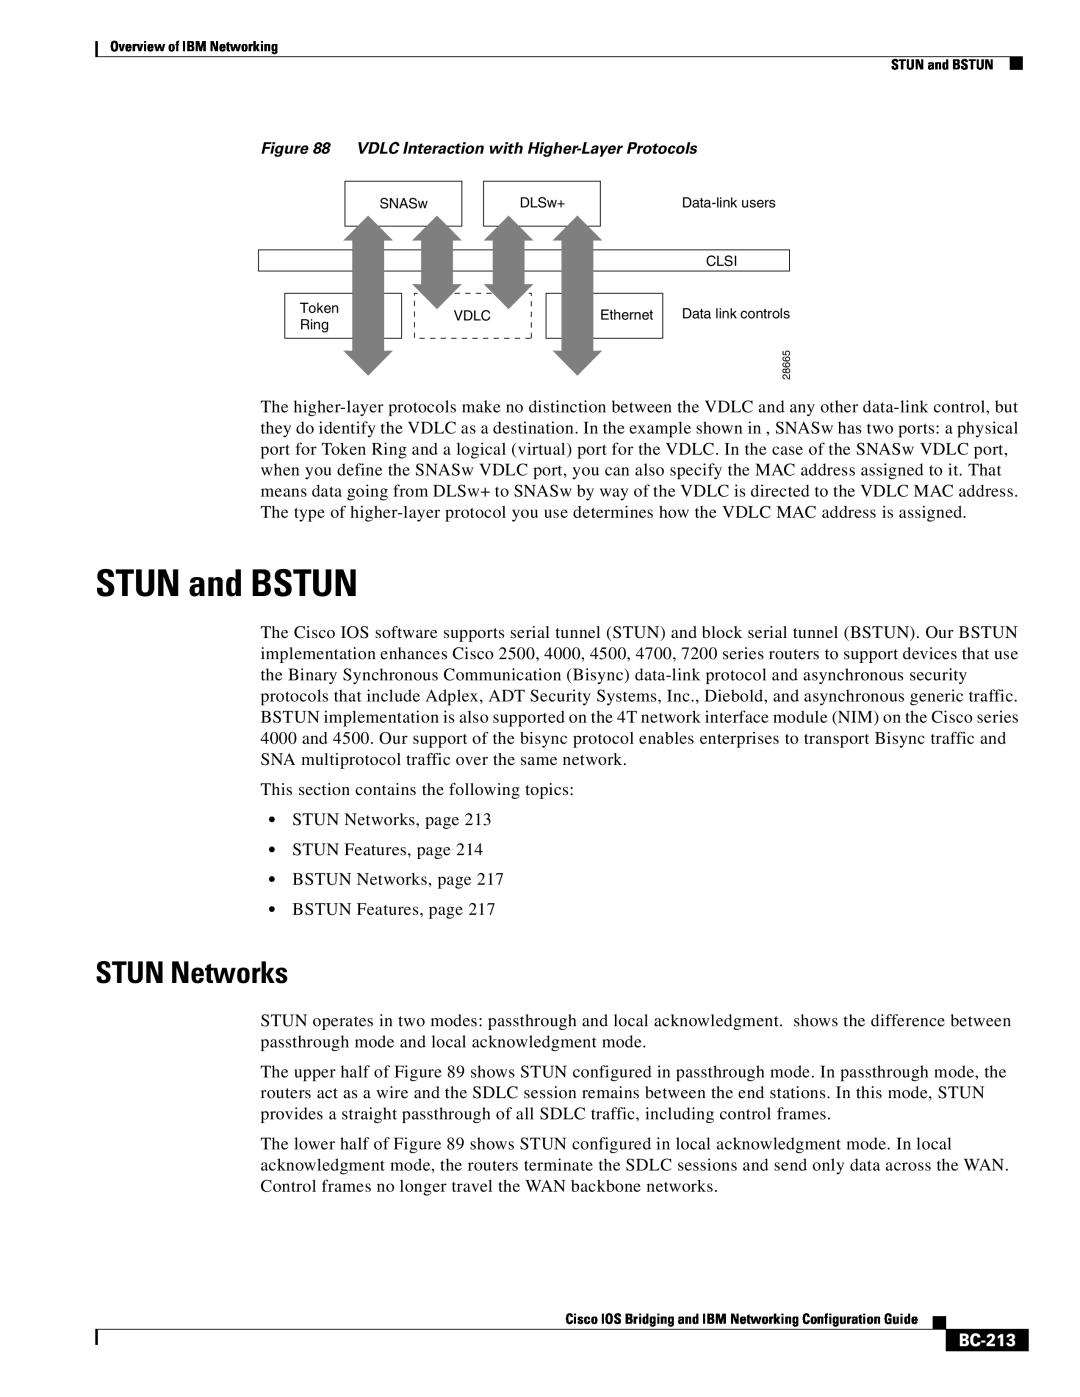 IBM BC-203 manual STUN and BSTUN, STUN Networks, BC-213 